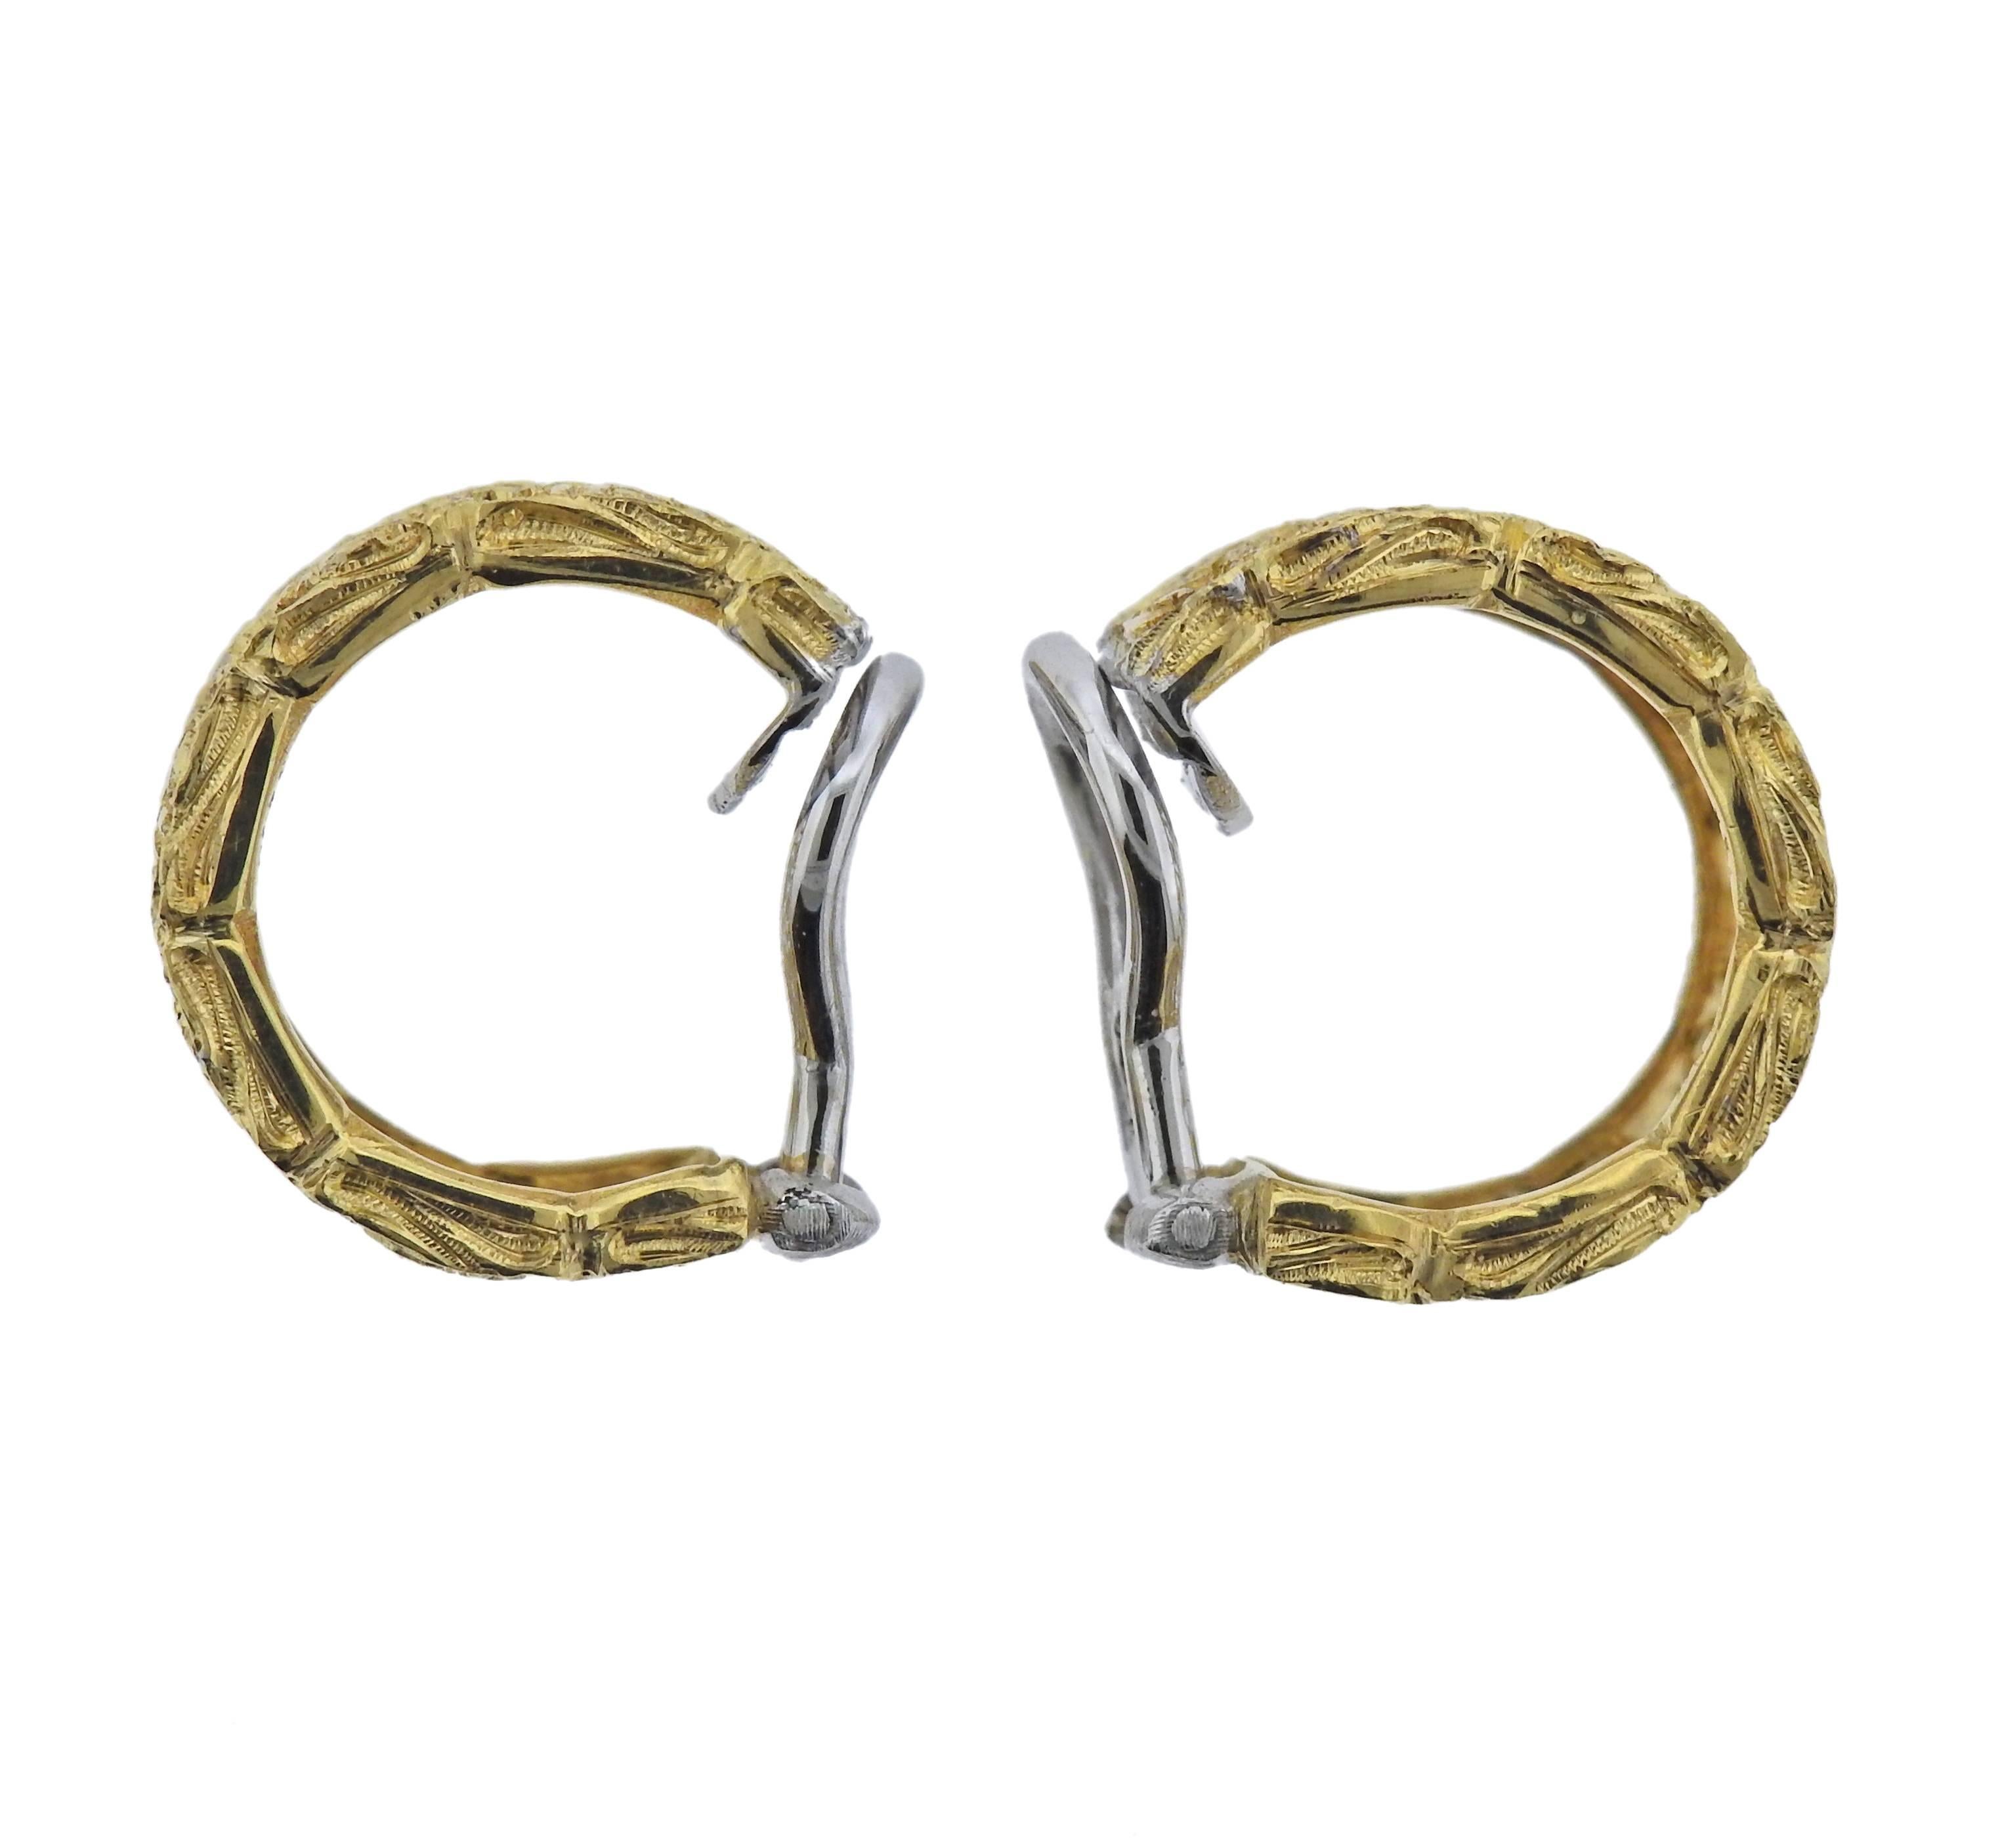 18k yellow gold hoop earrings, featuring rose flower openwork motif. Designed by Buccellati, retail $11400. Earrings 17mm x 10mm , weigh 10.7 grams. Marked: Gianmaria Buccellati, X5456.